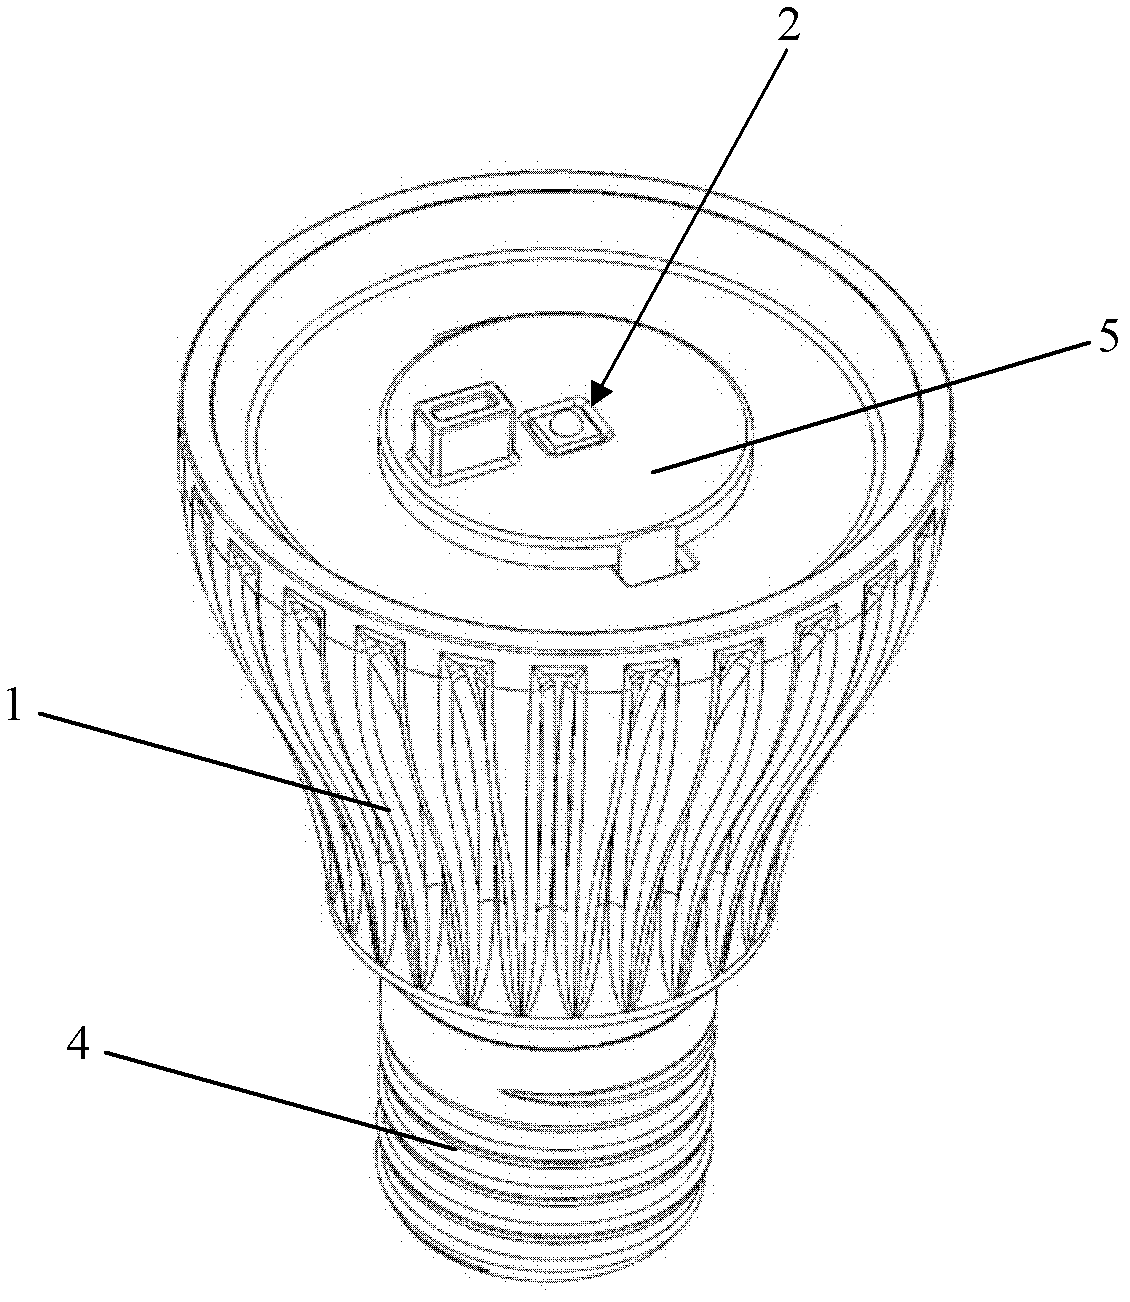 LED (light-emitting diode) lamp